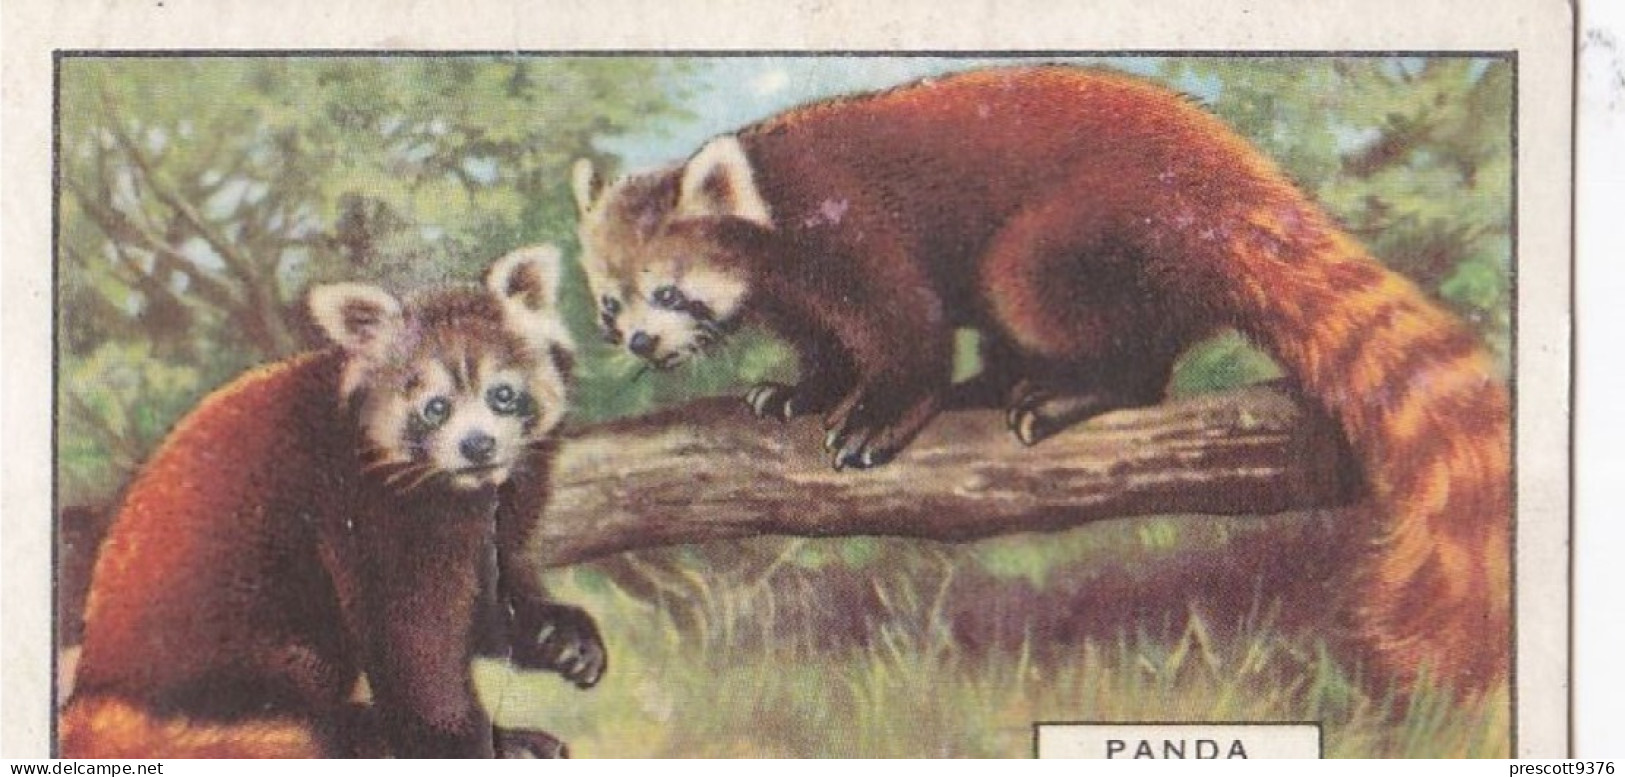 17 The Panda - Wild Animals 1937  - Gallaher Cigarette Card - Original - Wildlife - Gallaher